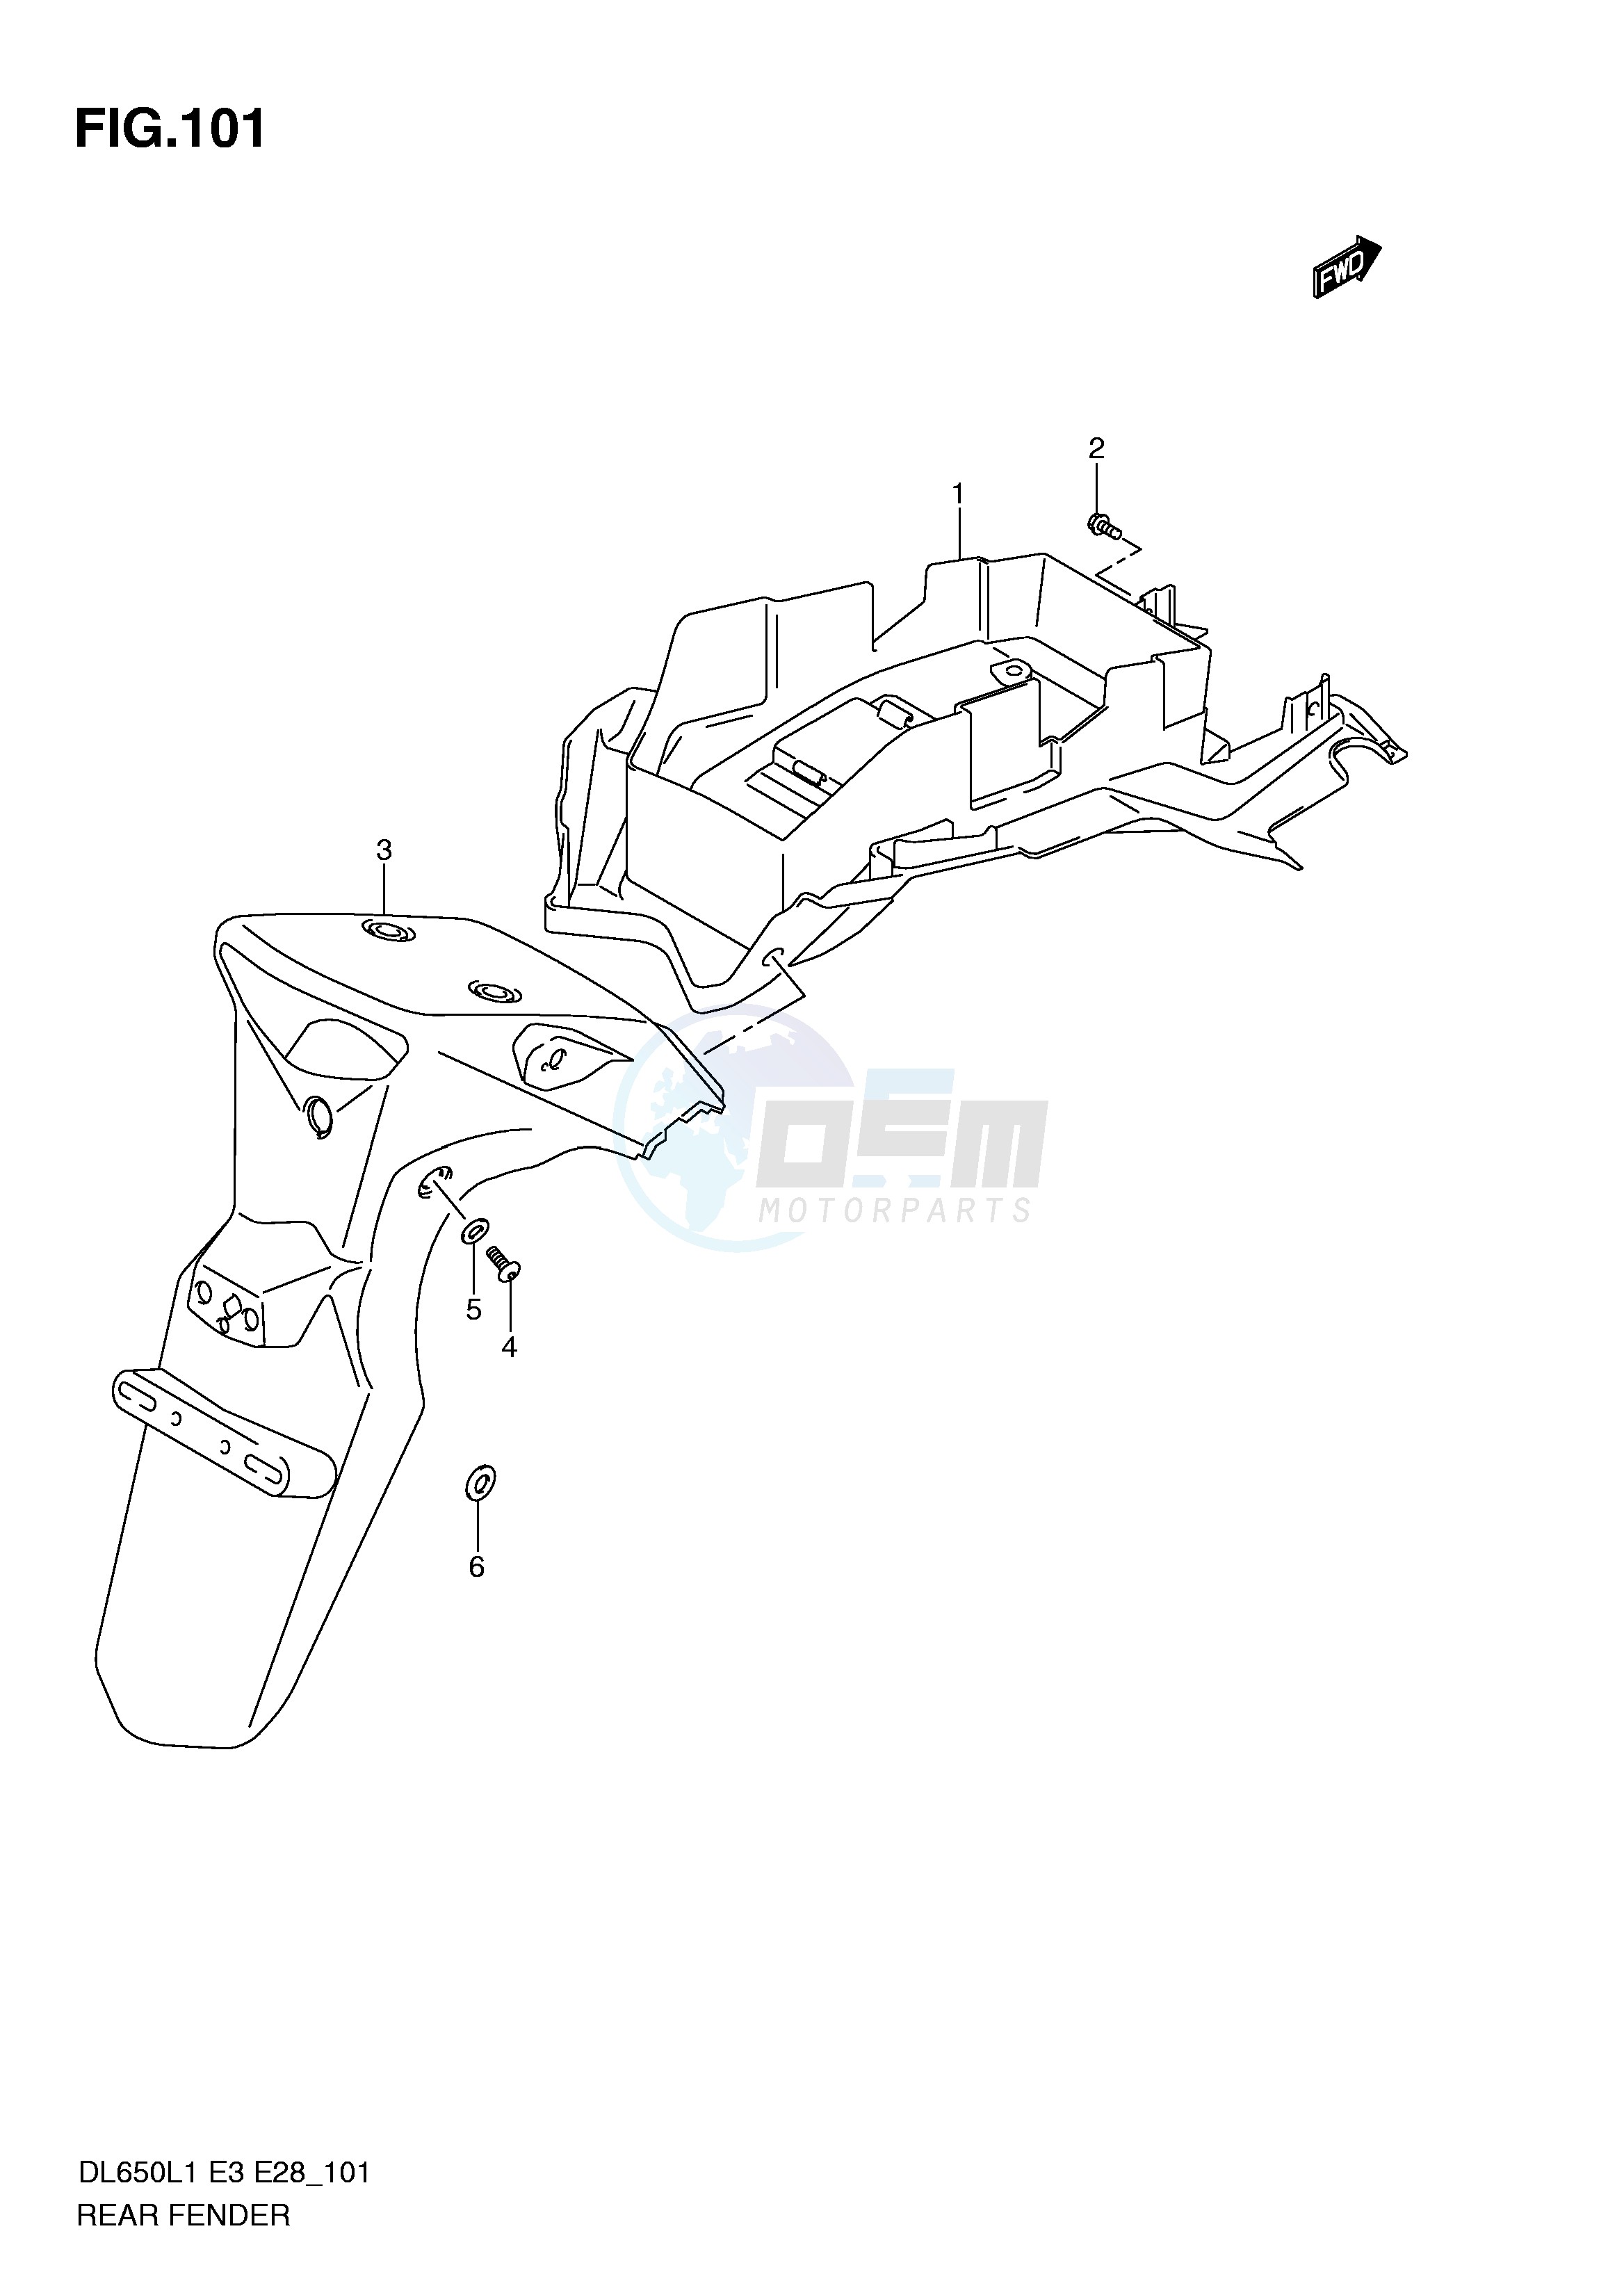 REAR FENDER (DL650AL1 E3) blueprint